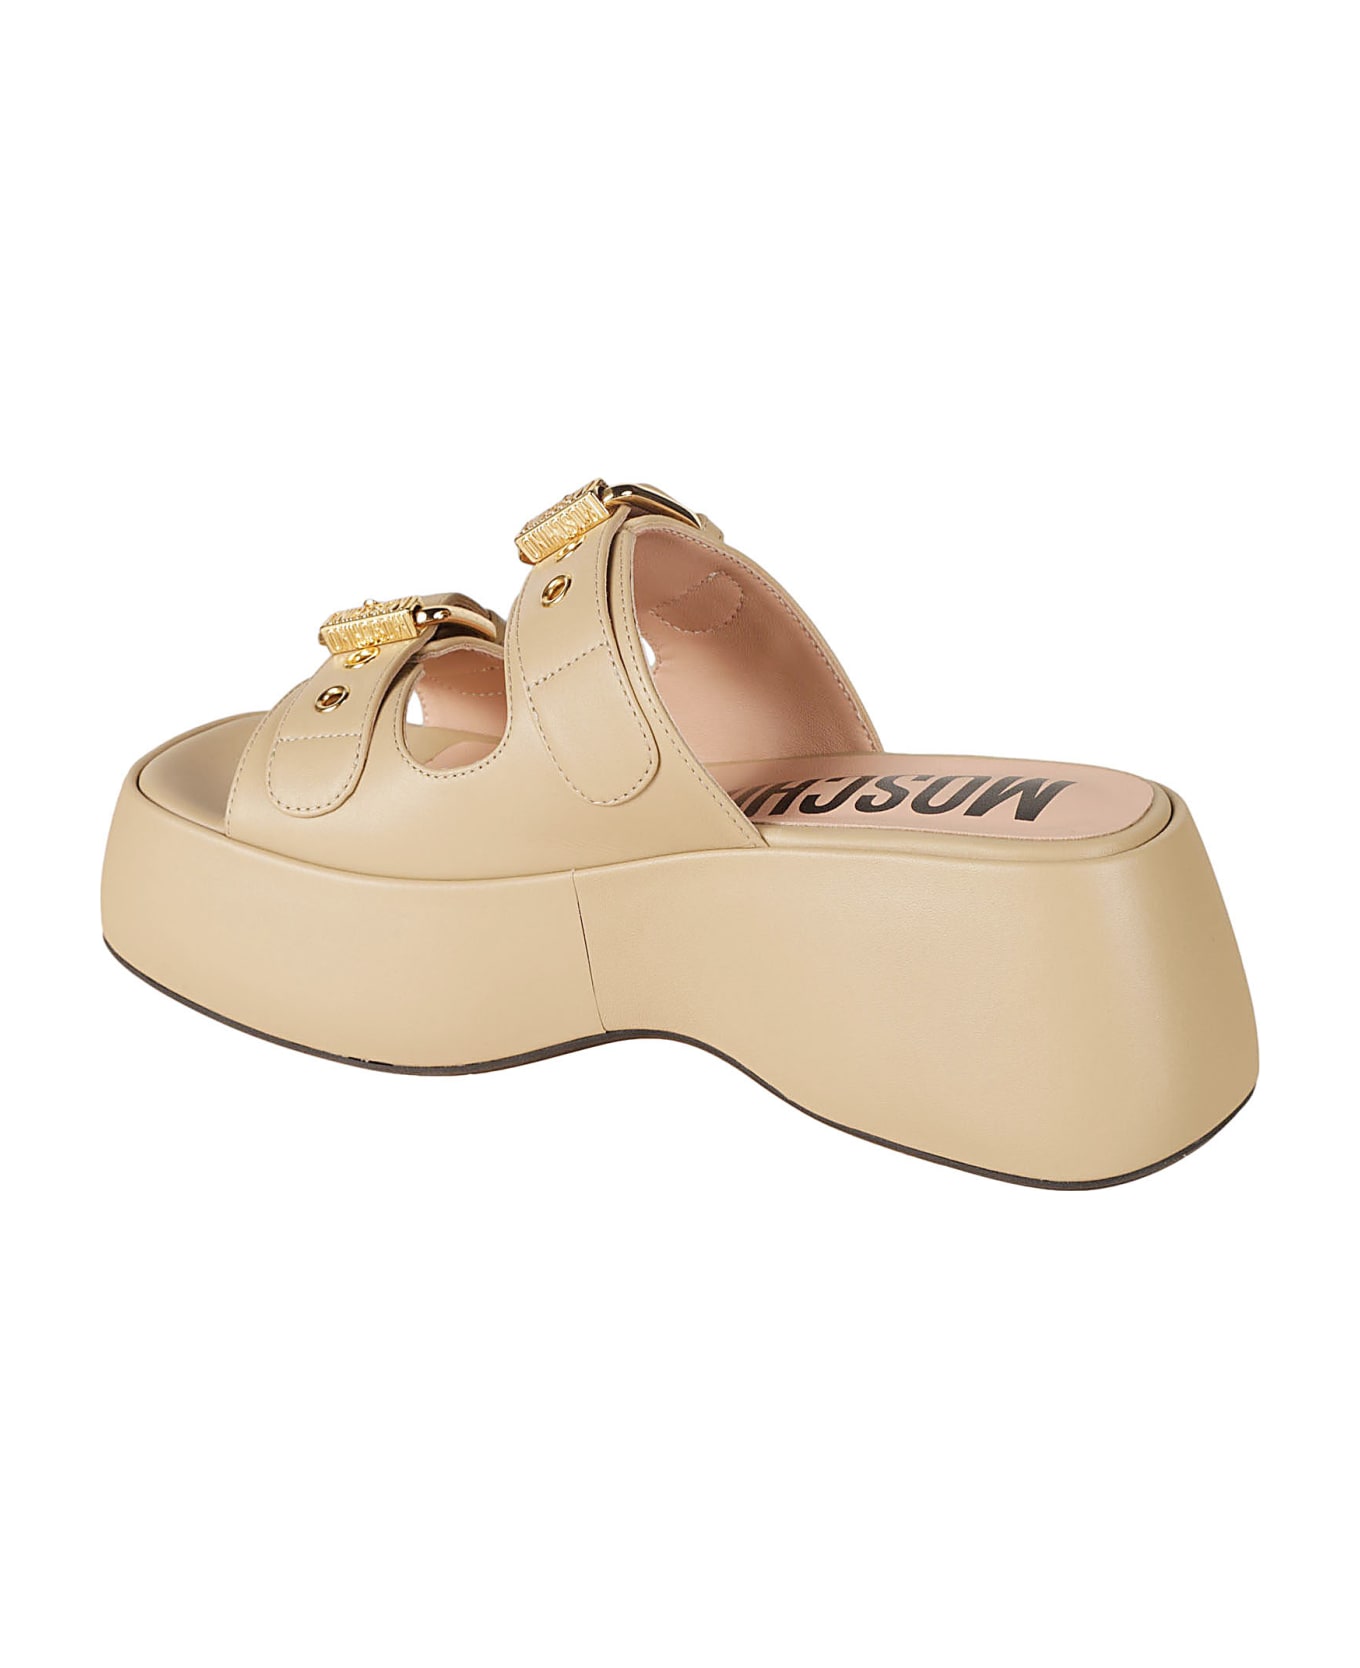 Moschino Dolly75 Sandals - Sabbia